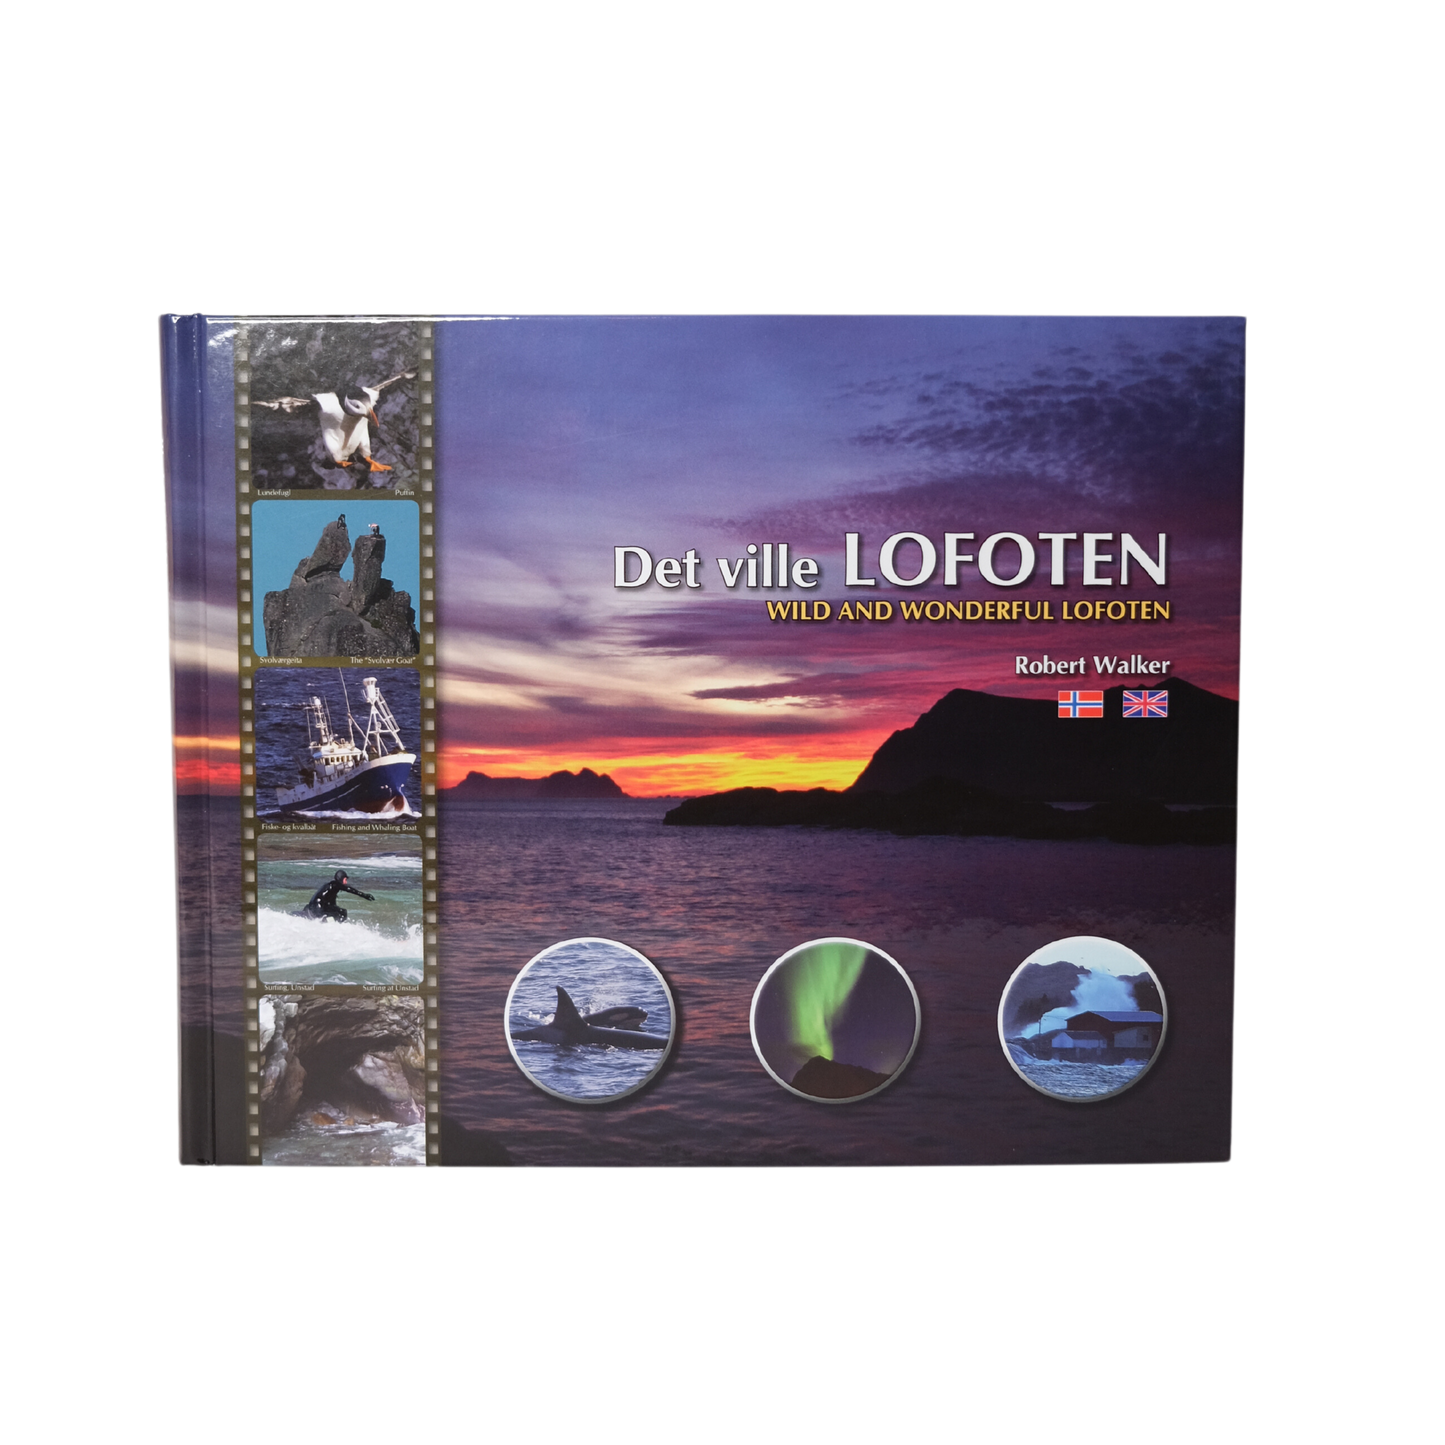 The wild and wonderful Lofoten